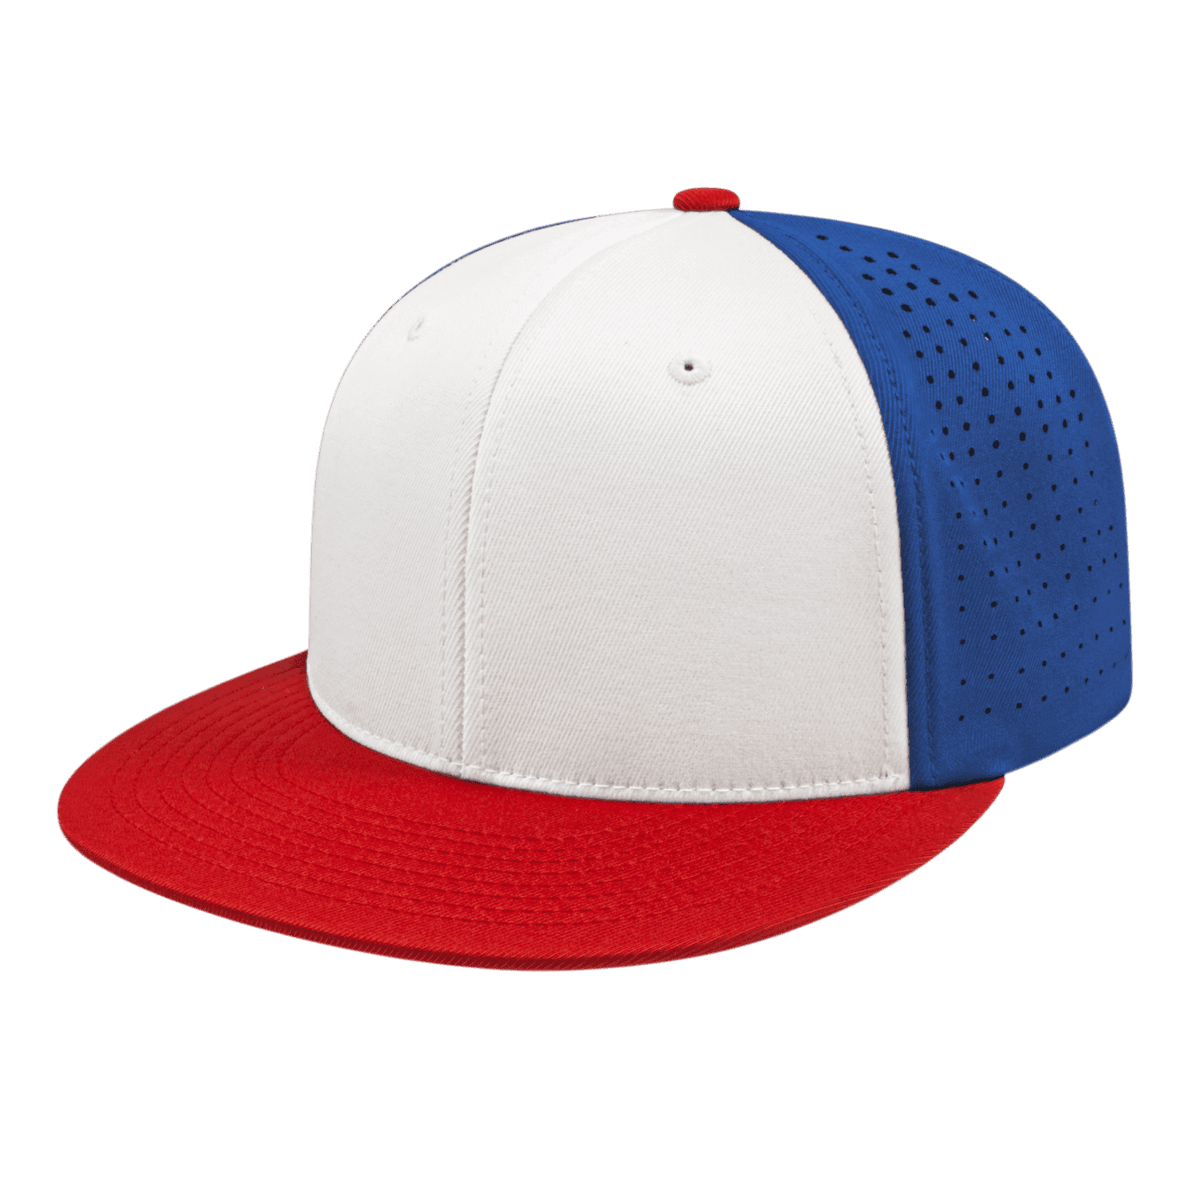 White Performance Flexfit Red America Royal Cap Cap i8503 - Perforated